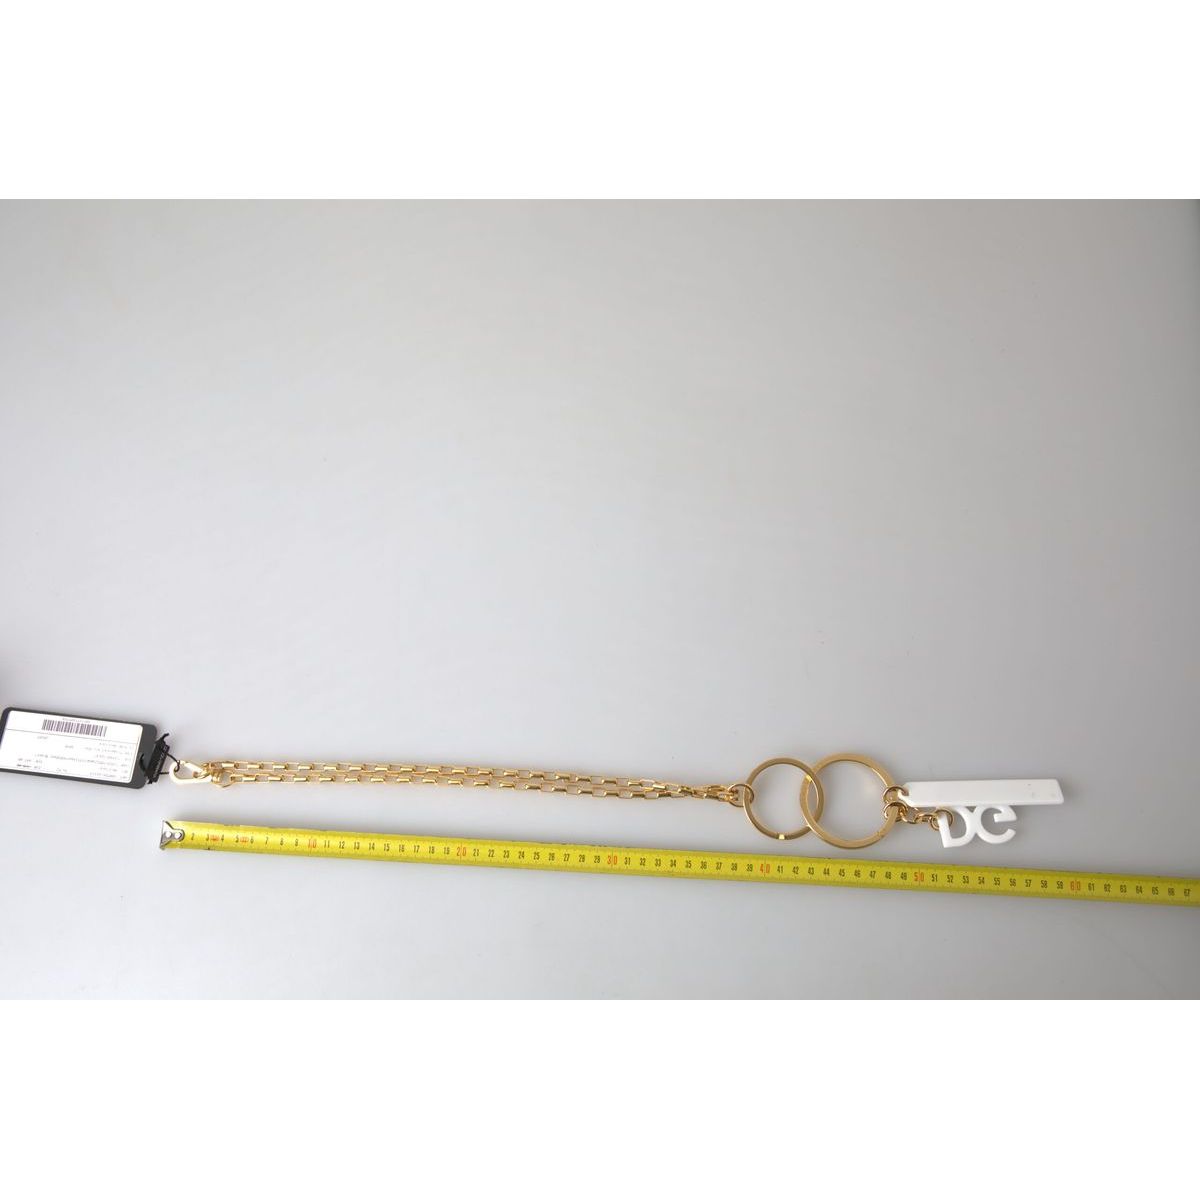 Dolce & Gabbana Chic Gold Charm Chain Necklace gold-tone-brass-chain-link-dg-logo-pendant-necklace 465A1298-scaled-7d367360-a66_e72fa3d5-d776-466b-b79a-45ab67d384df.jpg